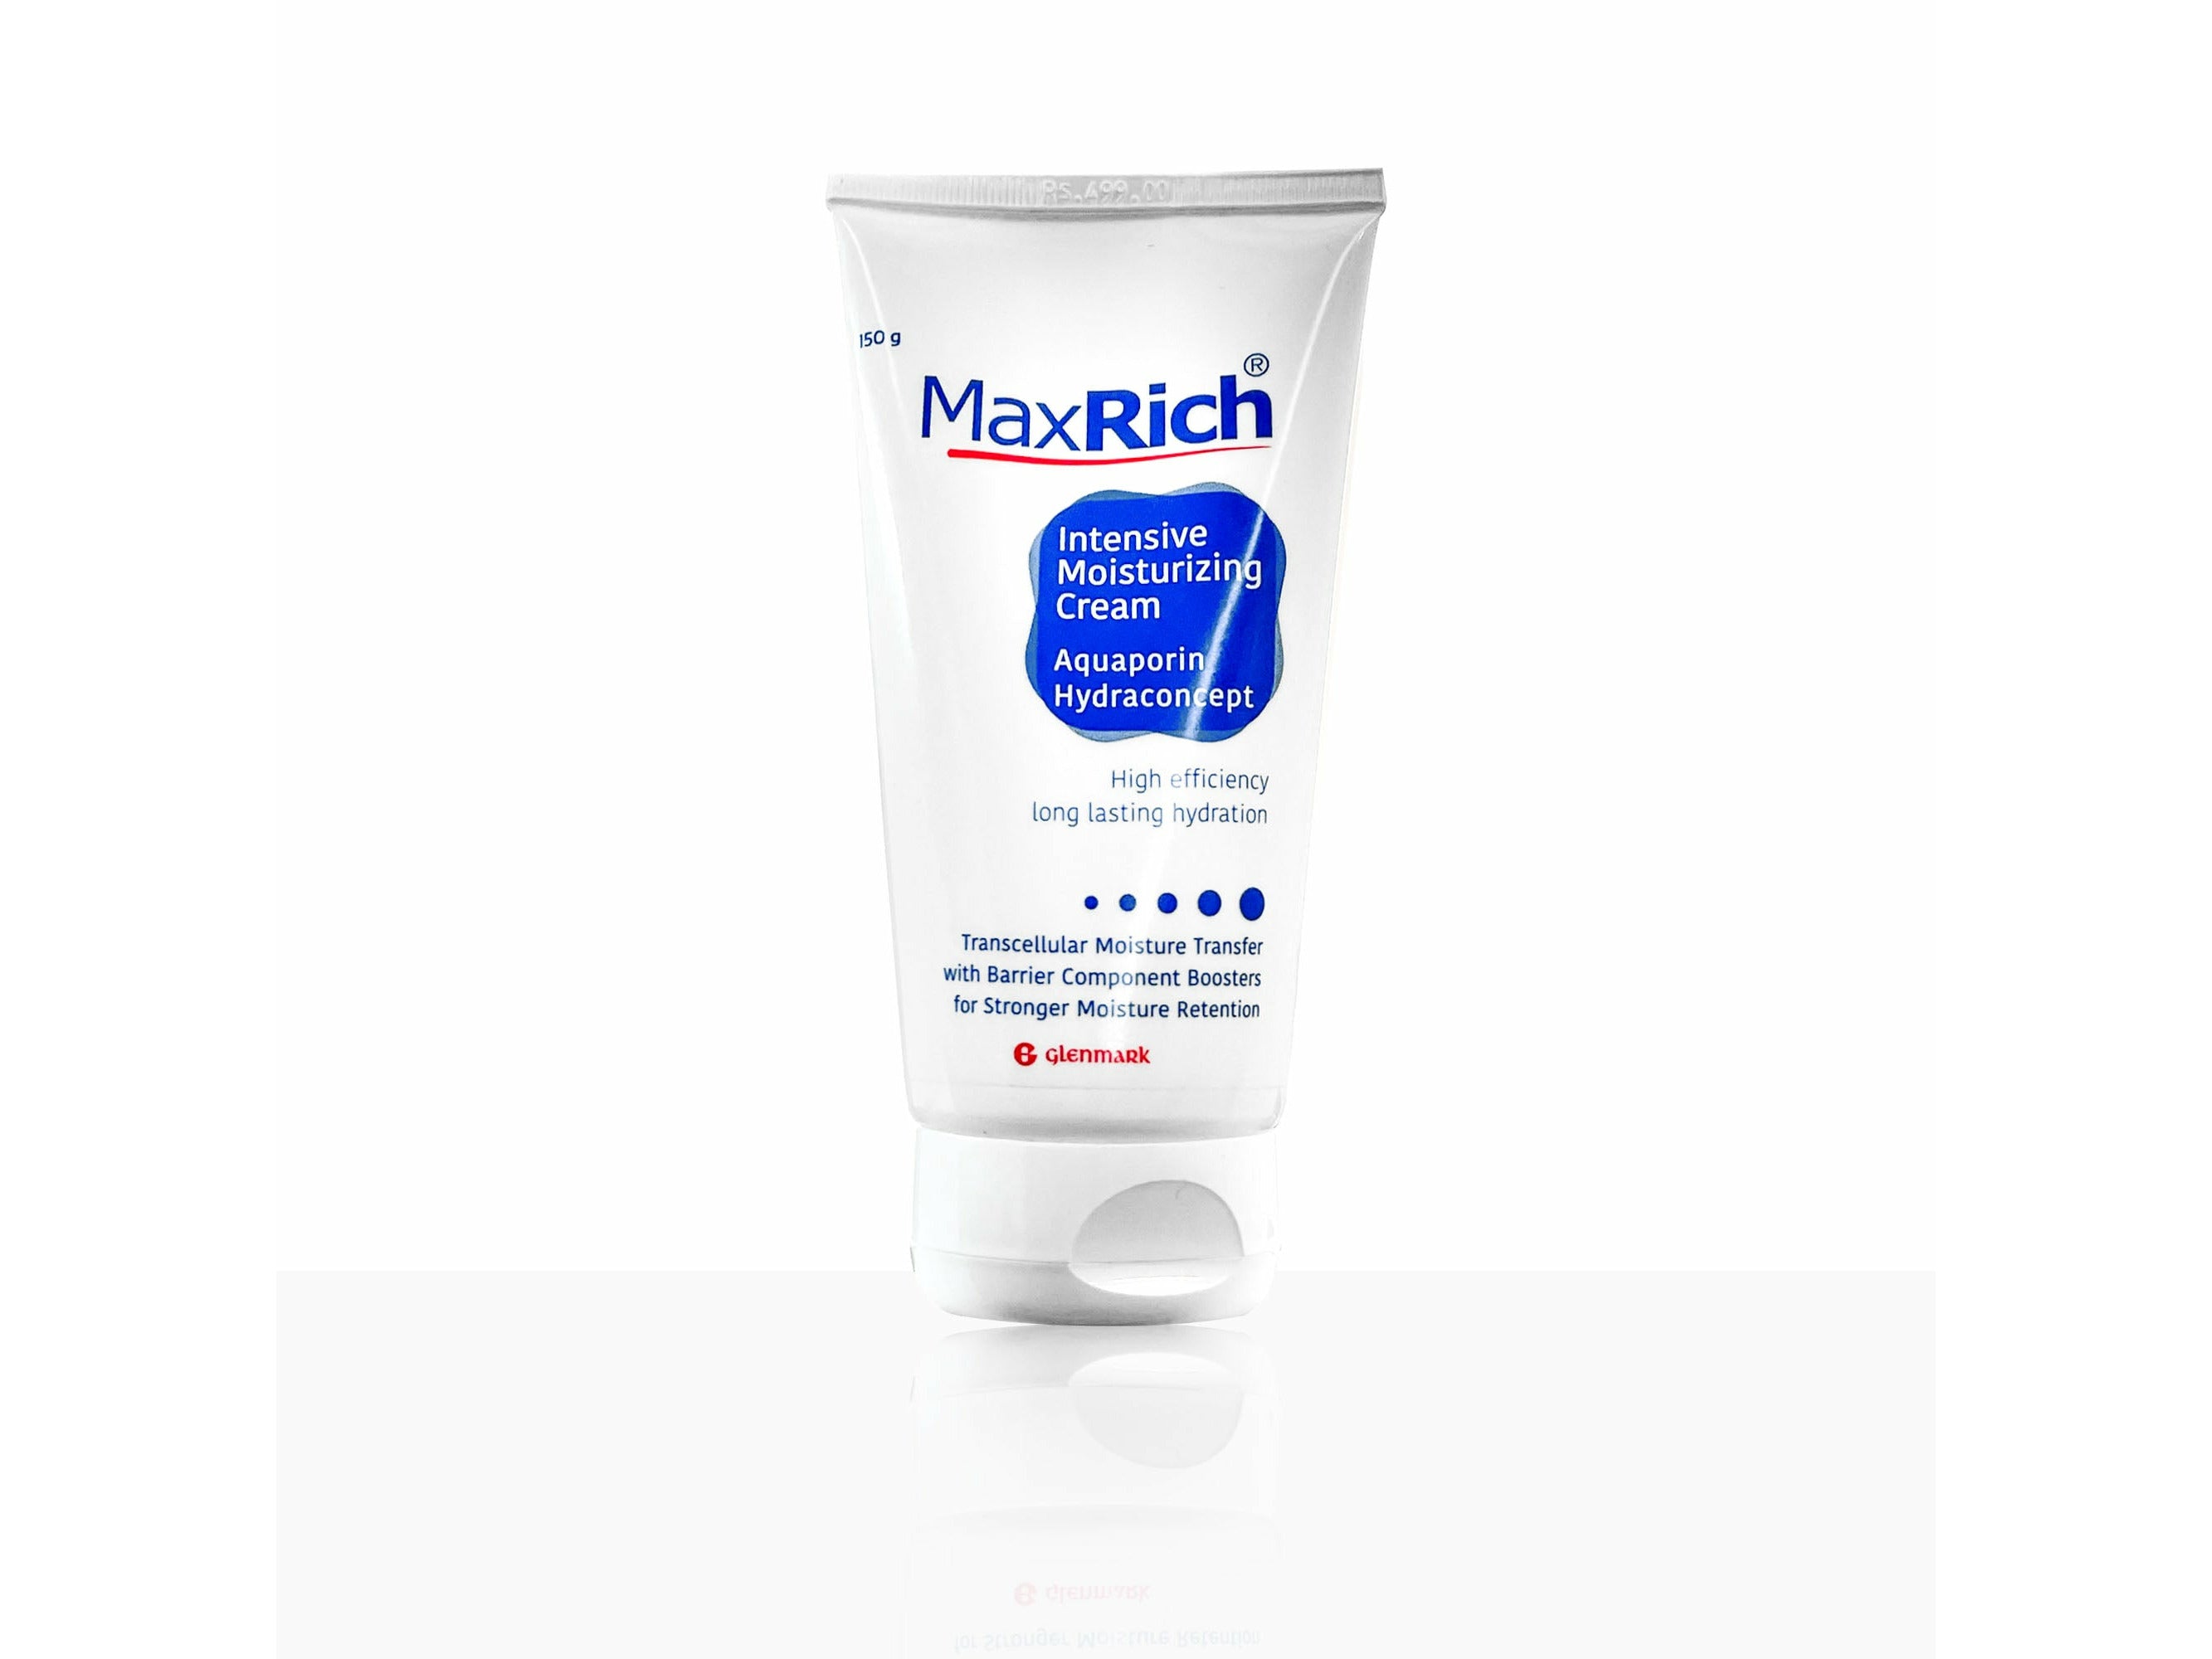 MaxRich Intensive Moisturizing Cream Aquaporin Hydraconcept - Clinikally